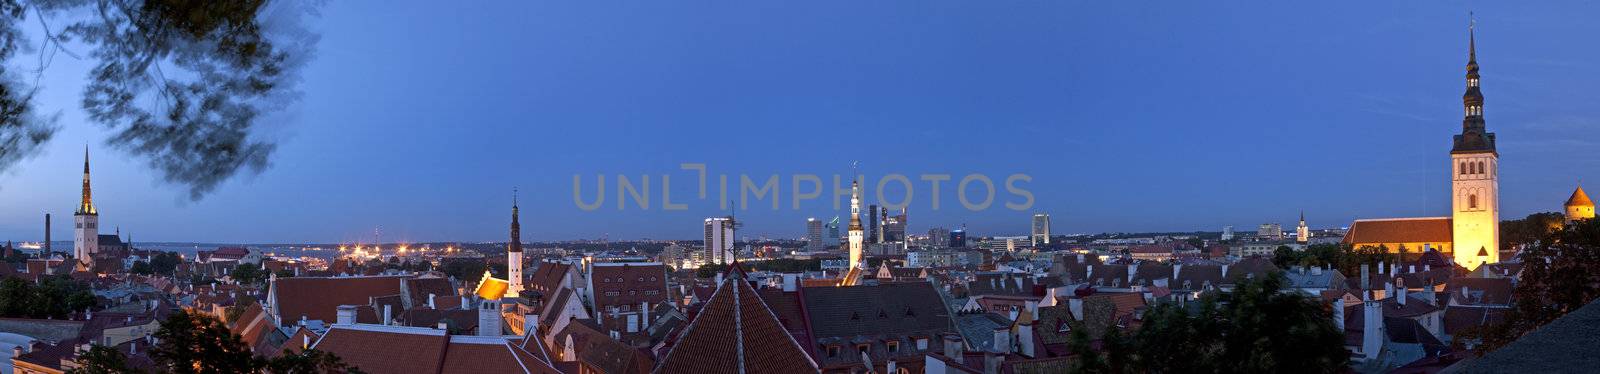 Panoramic View of Tallinn Old Town, Estonia.